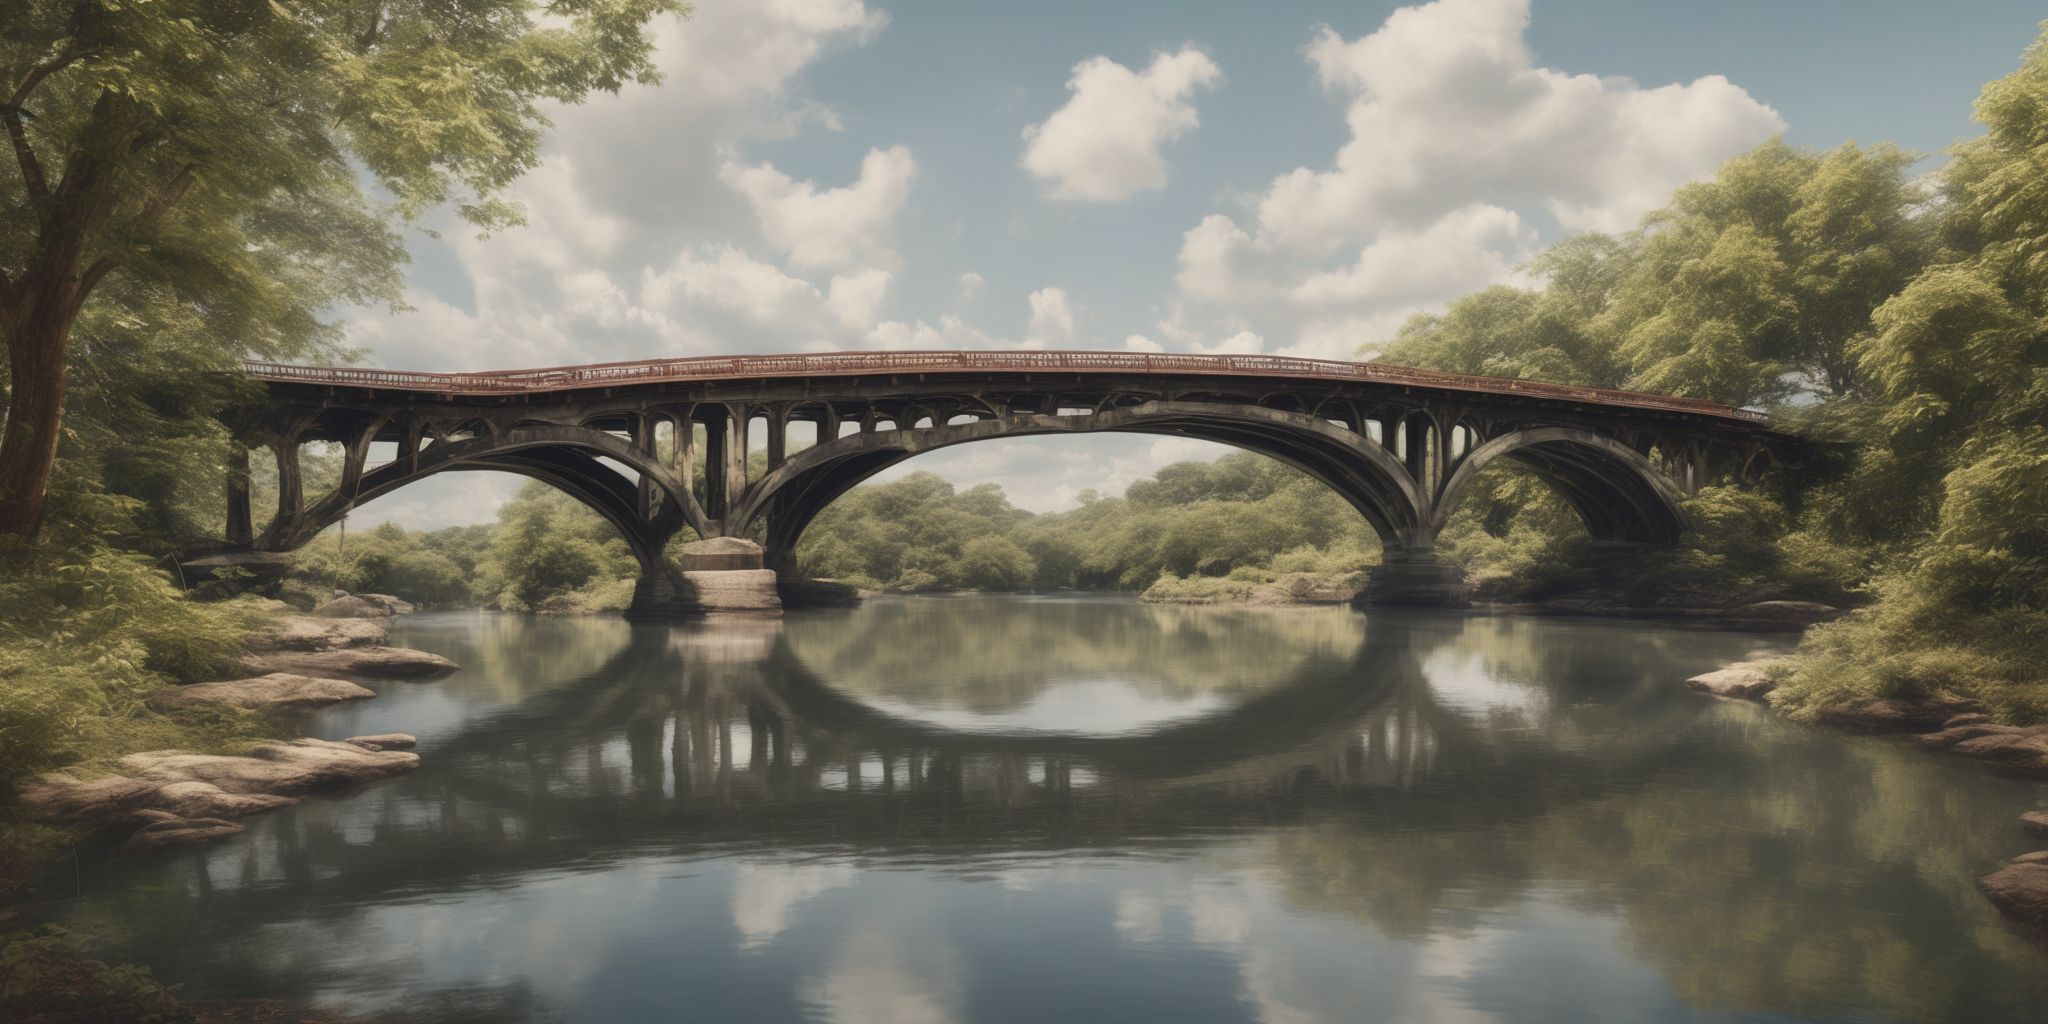 Loan bridge  in realistic, photographic style